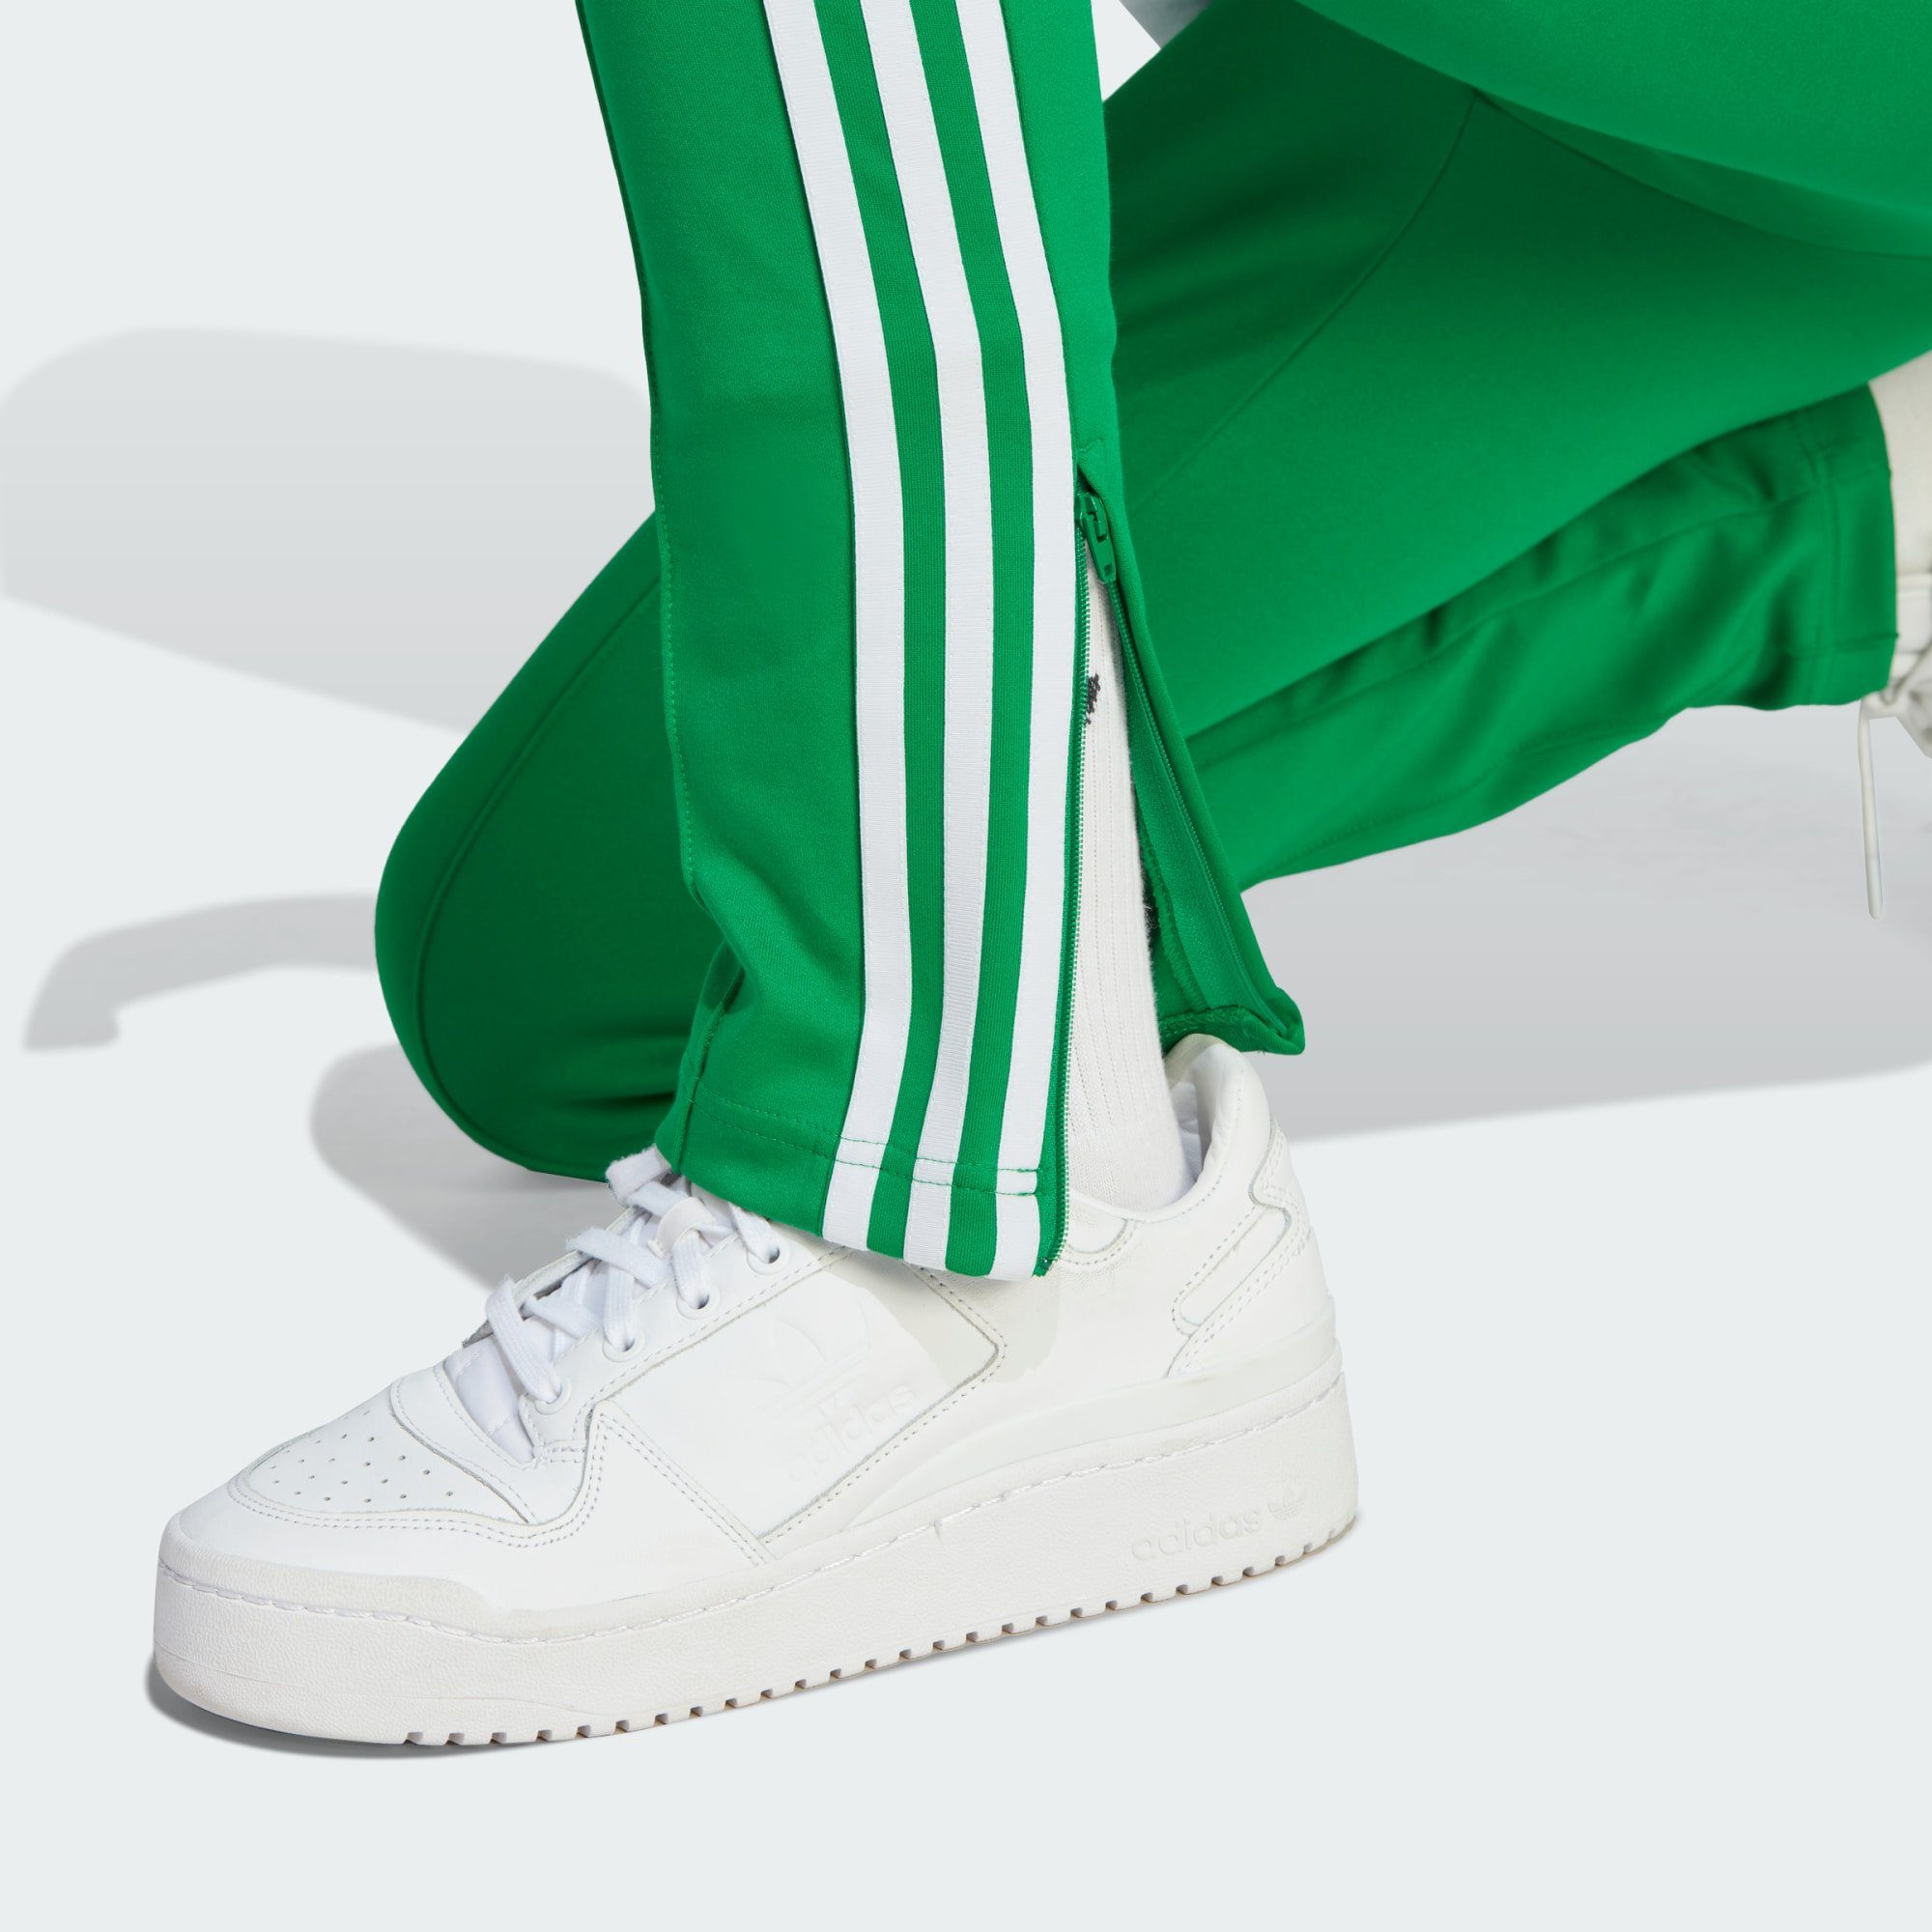 adidas Originals ADICOLOR Green TRAININGSHOSE SST Jogginghose